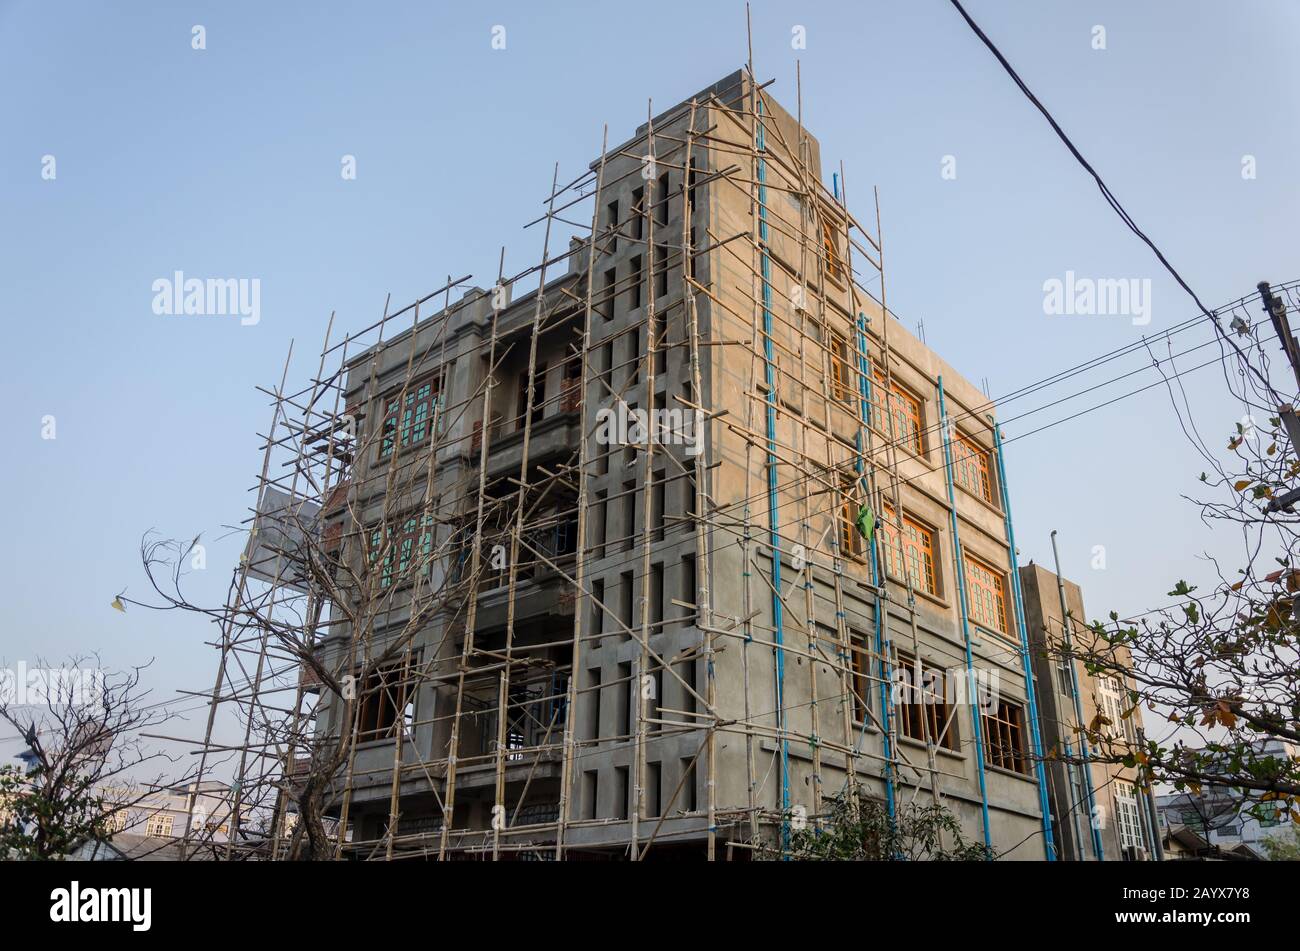 Bamboo scaffolding in Mandalay, Myanmar Stock Photo